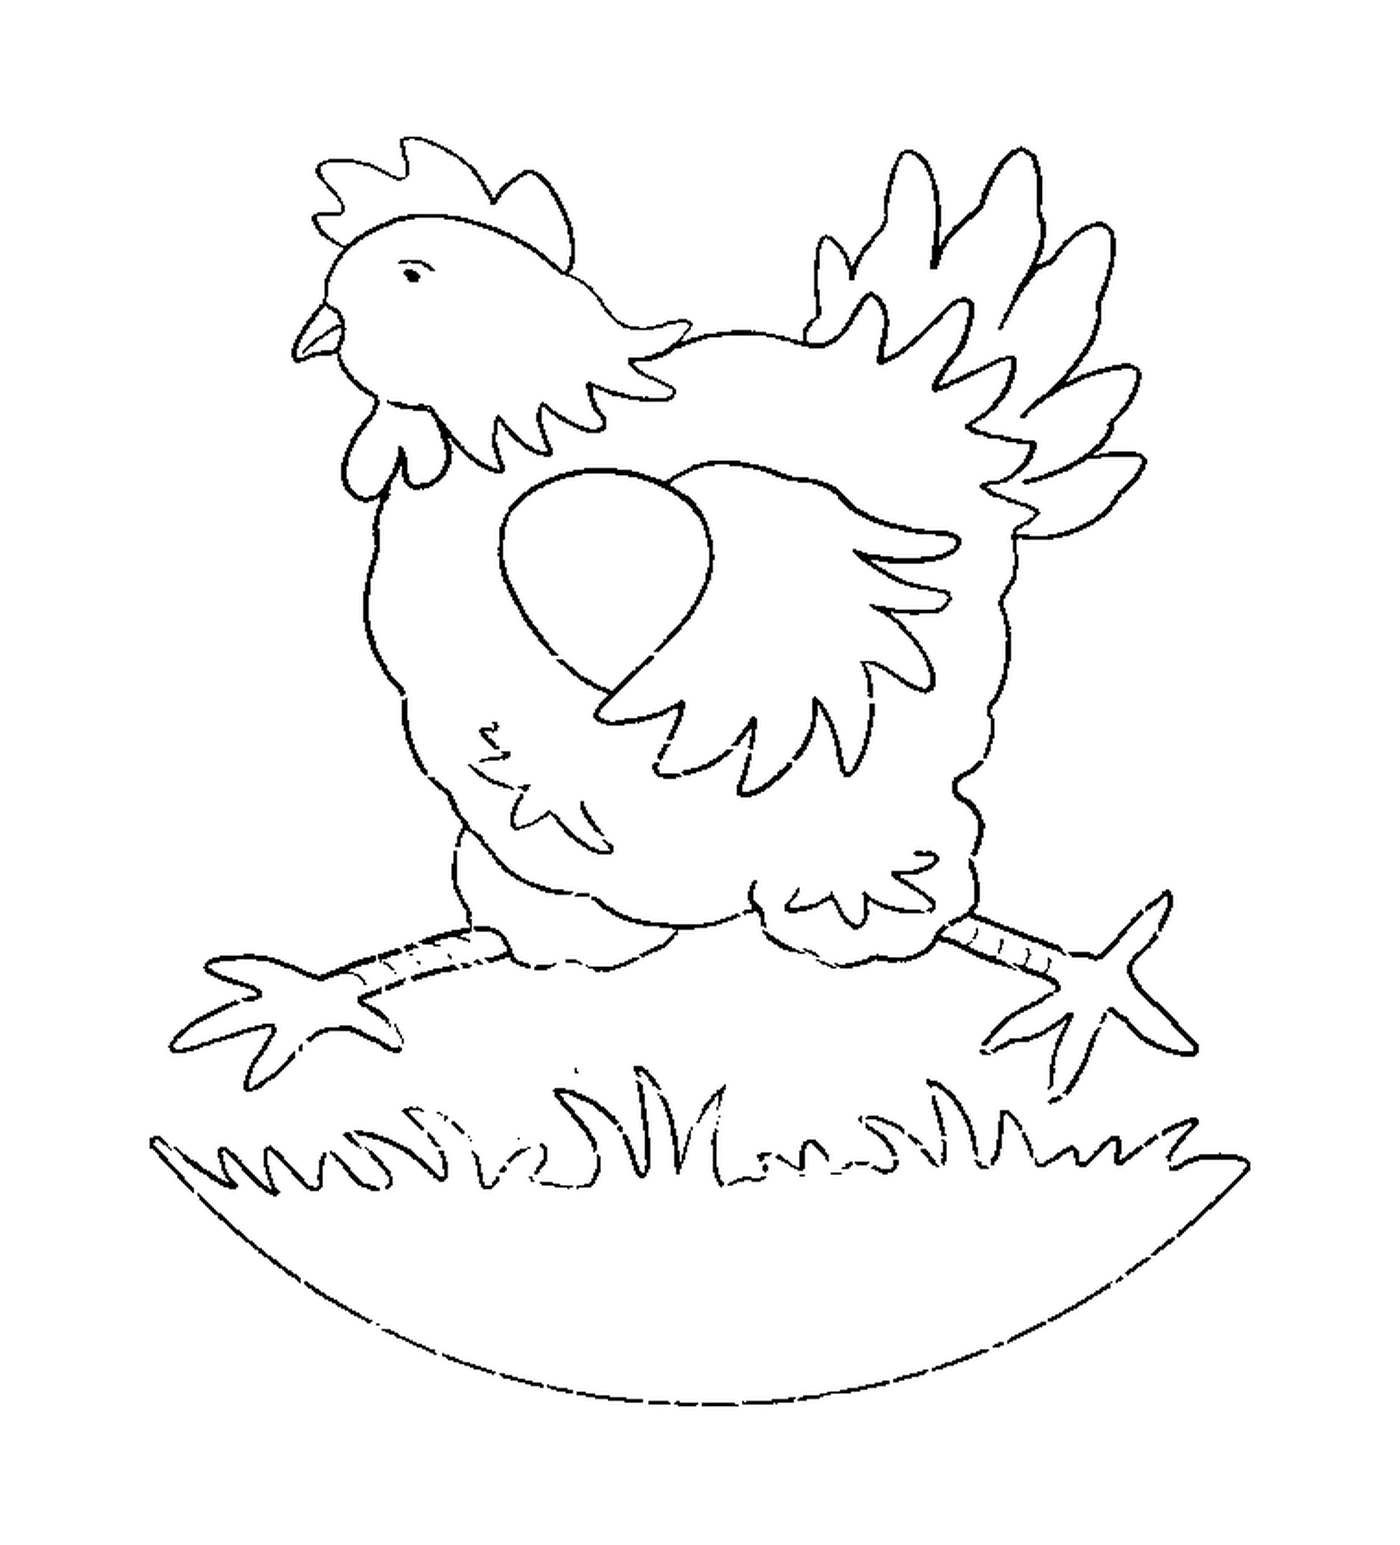  Pollo de pie sobre huevo 